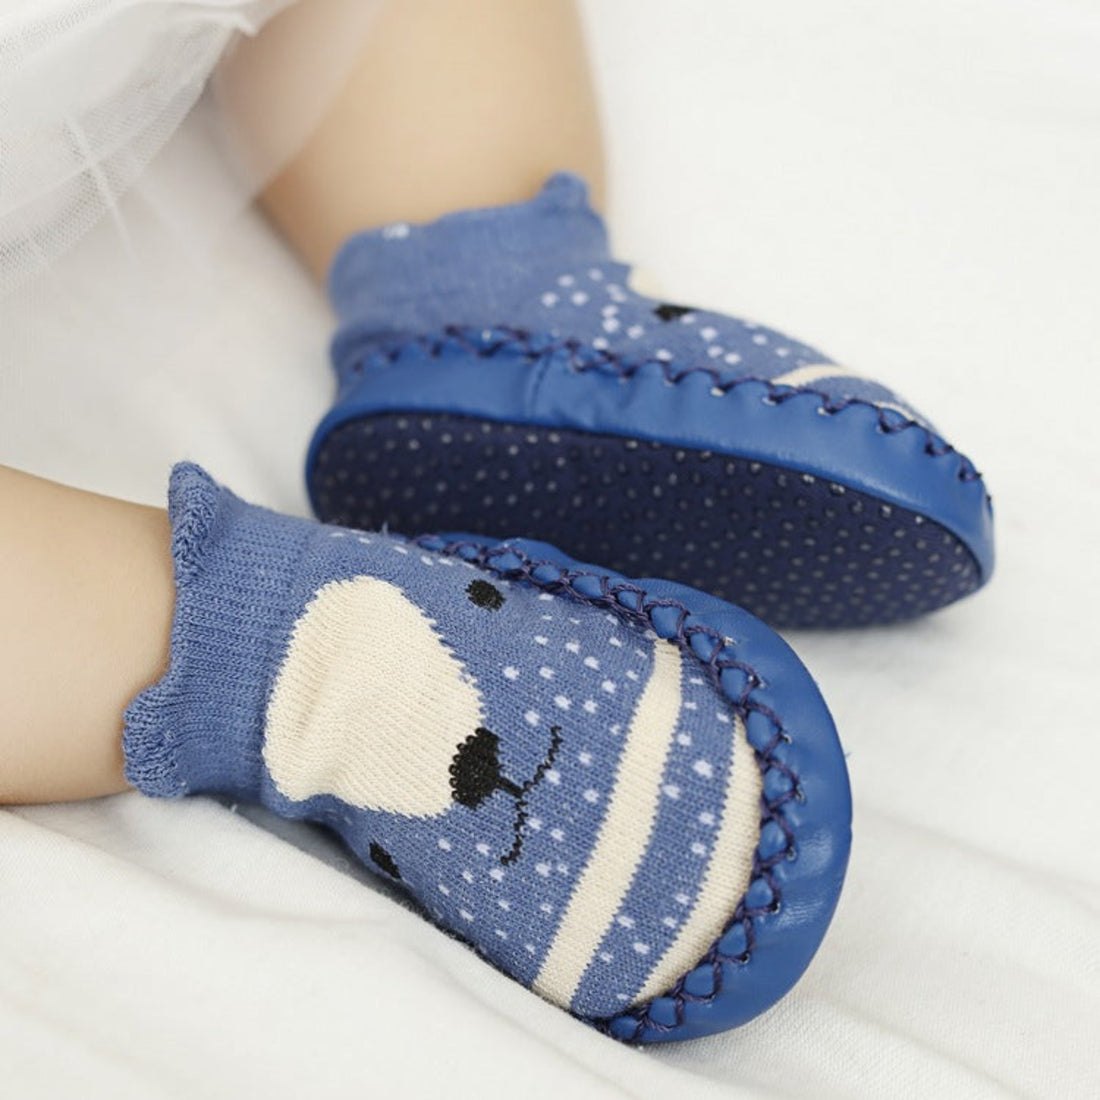 Cute design baby socks in blue